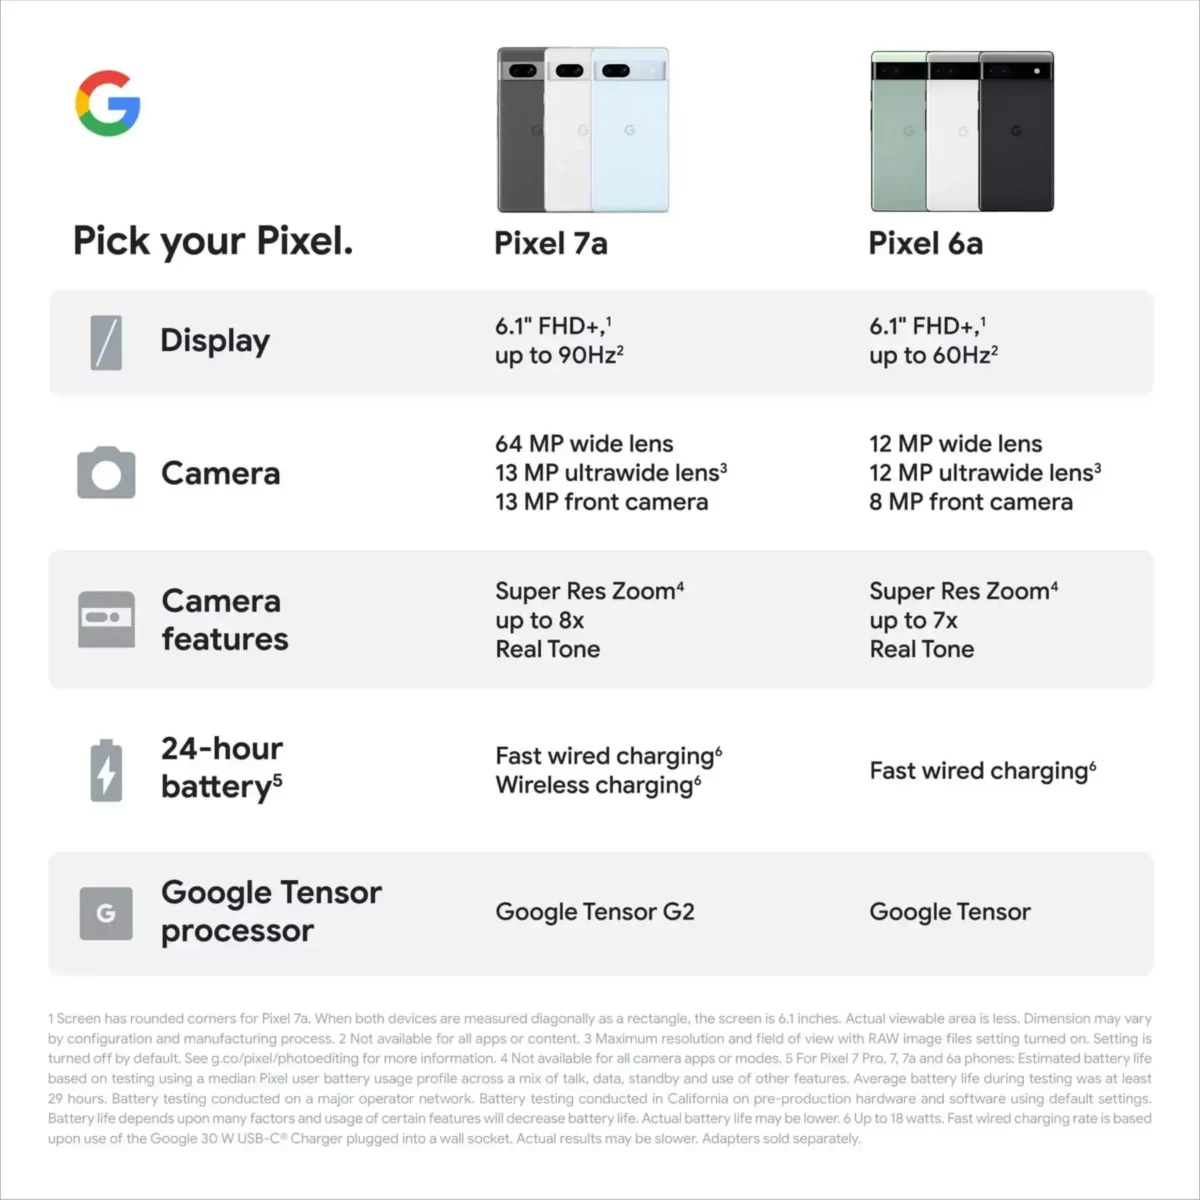 Google Pixel 7a Marketing Material